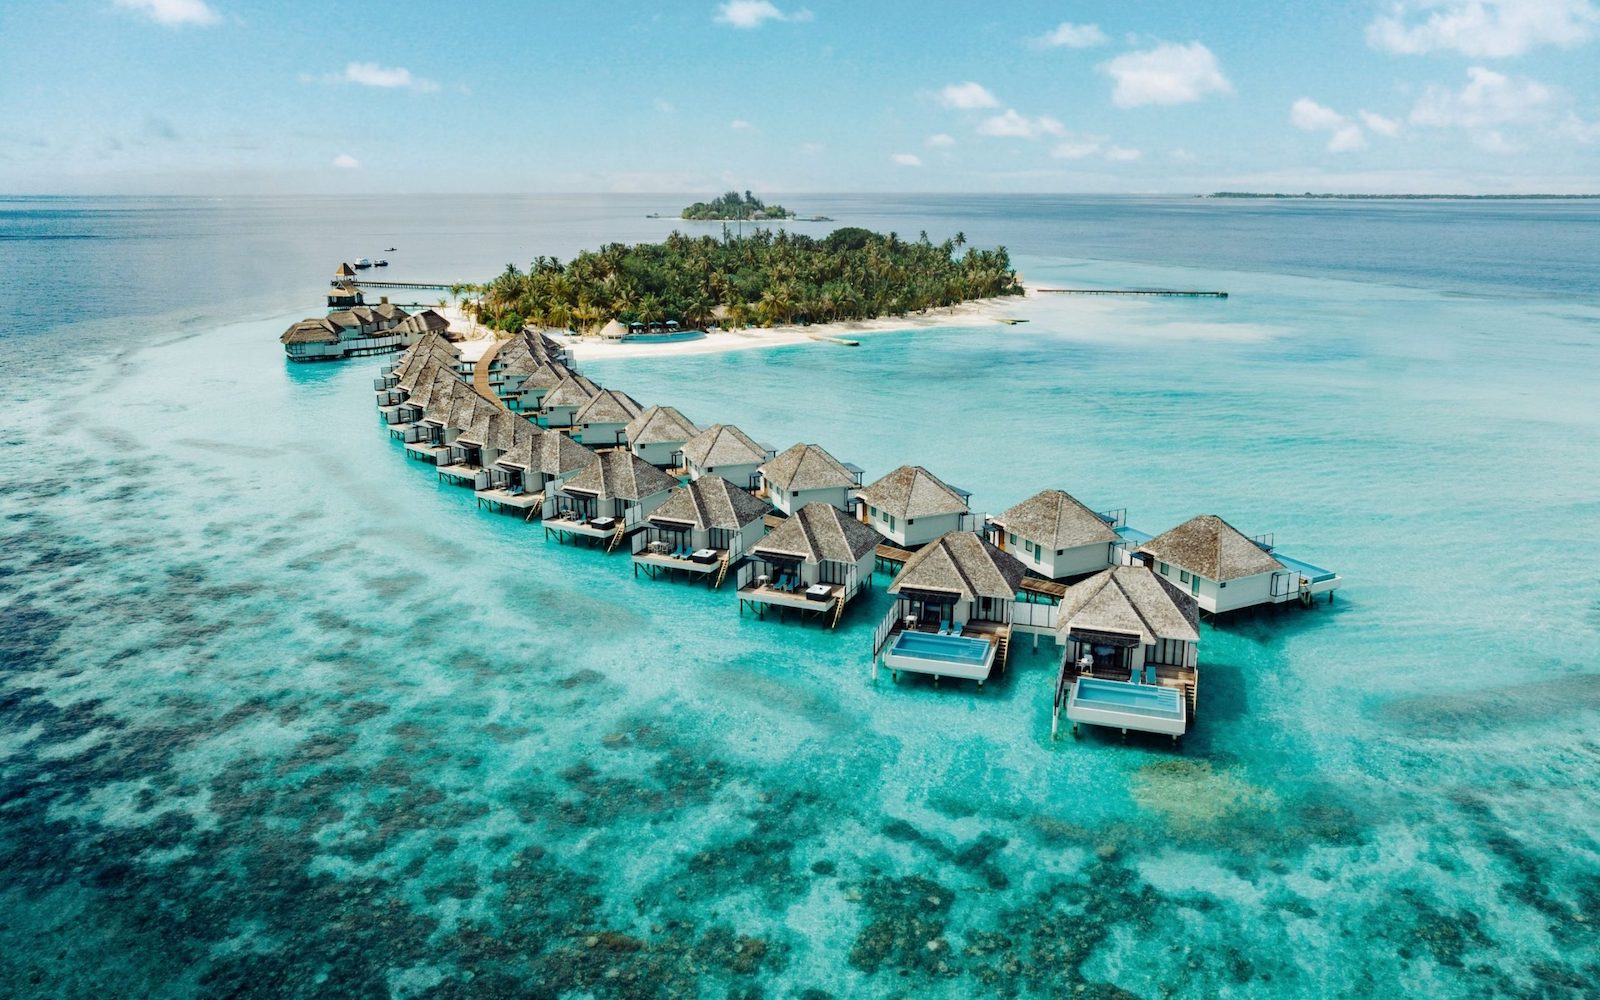 Exterior image of Nova Maldives, showing overwater villas in the Maldives